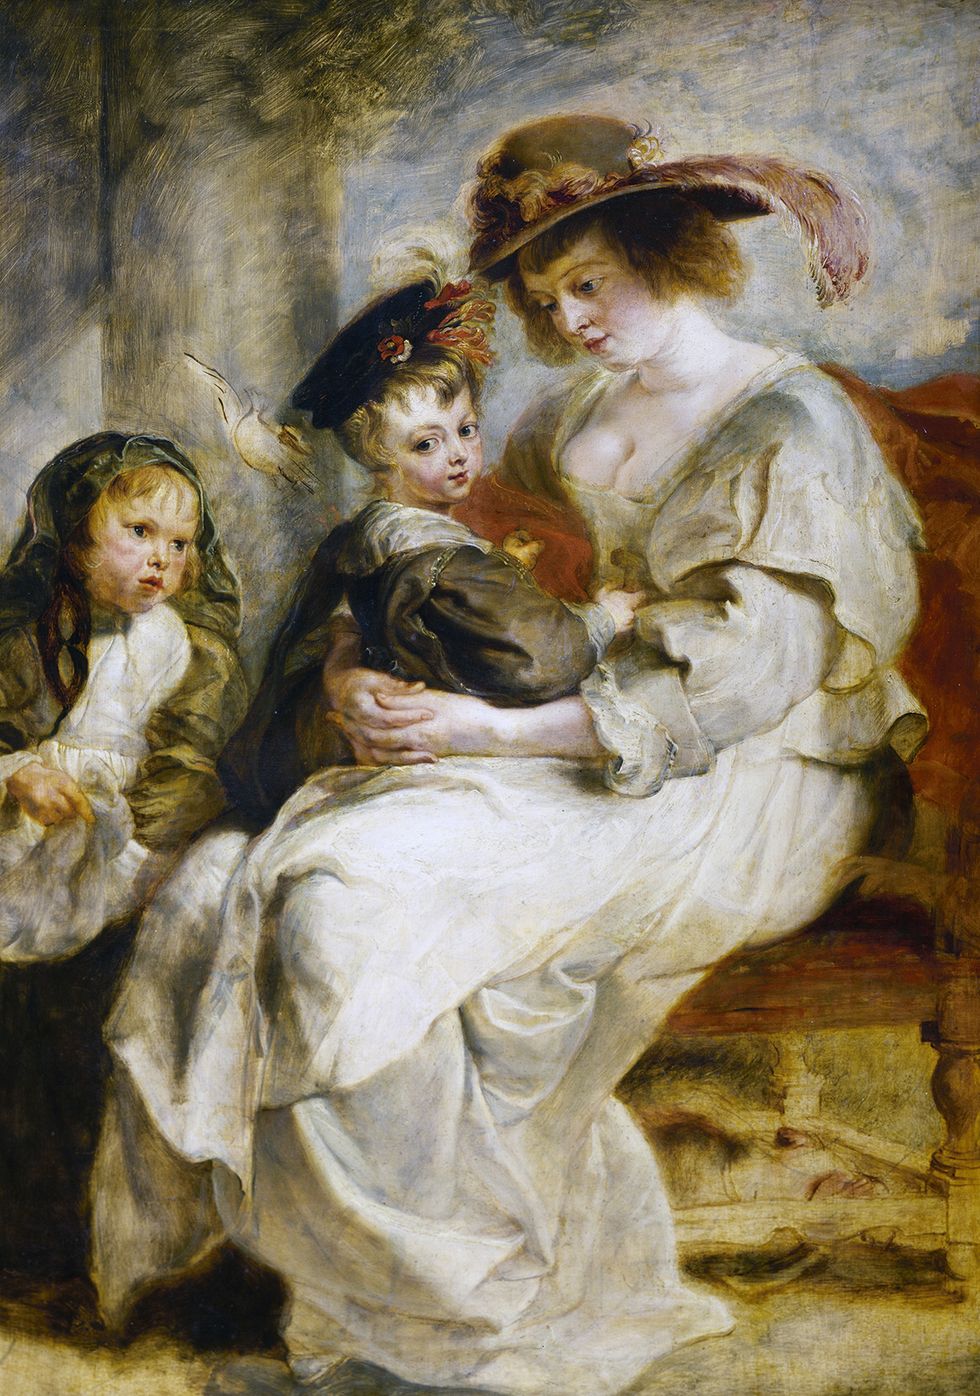 Rubens e Hélène Fourment: storie d’amore nella storia dell’arte